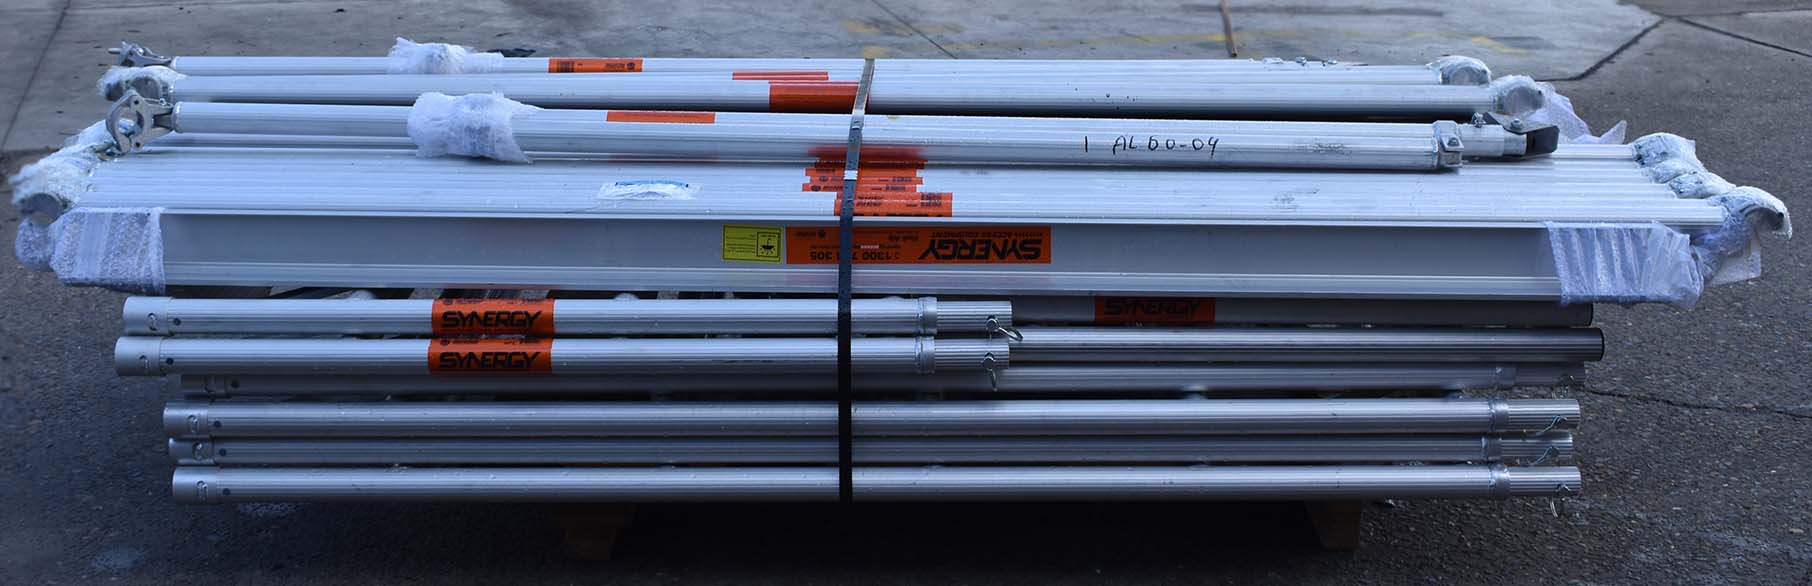 Aluminium Foldable Extendable Narrow Scaffold 4.2m (Height) 1.2m - 2.0m (Scaffold Length) (a)